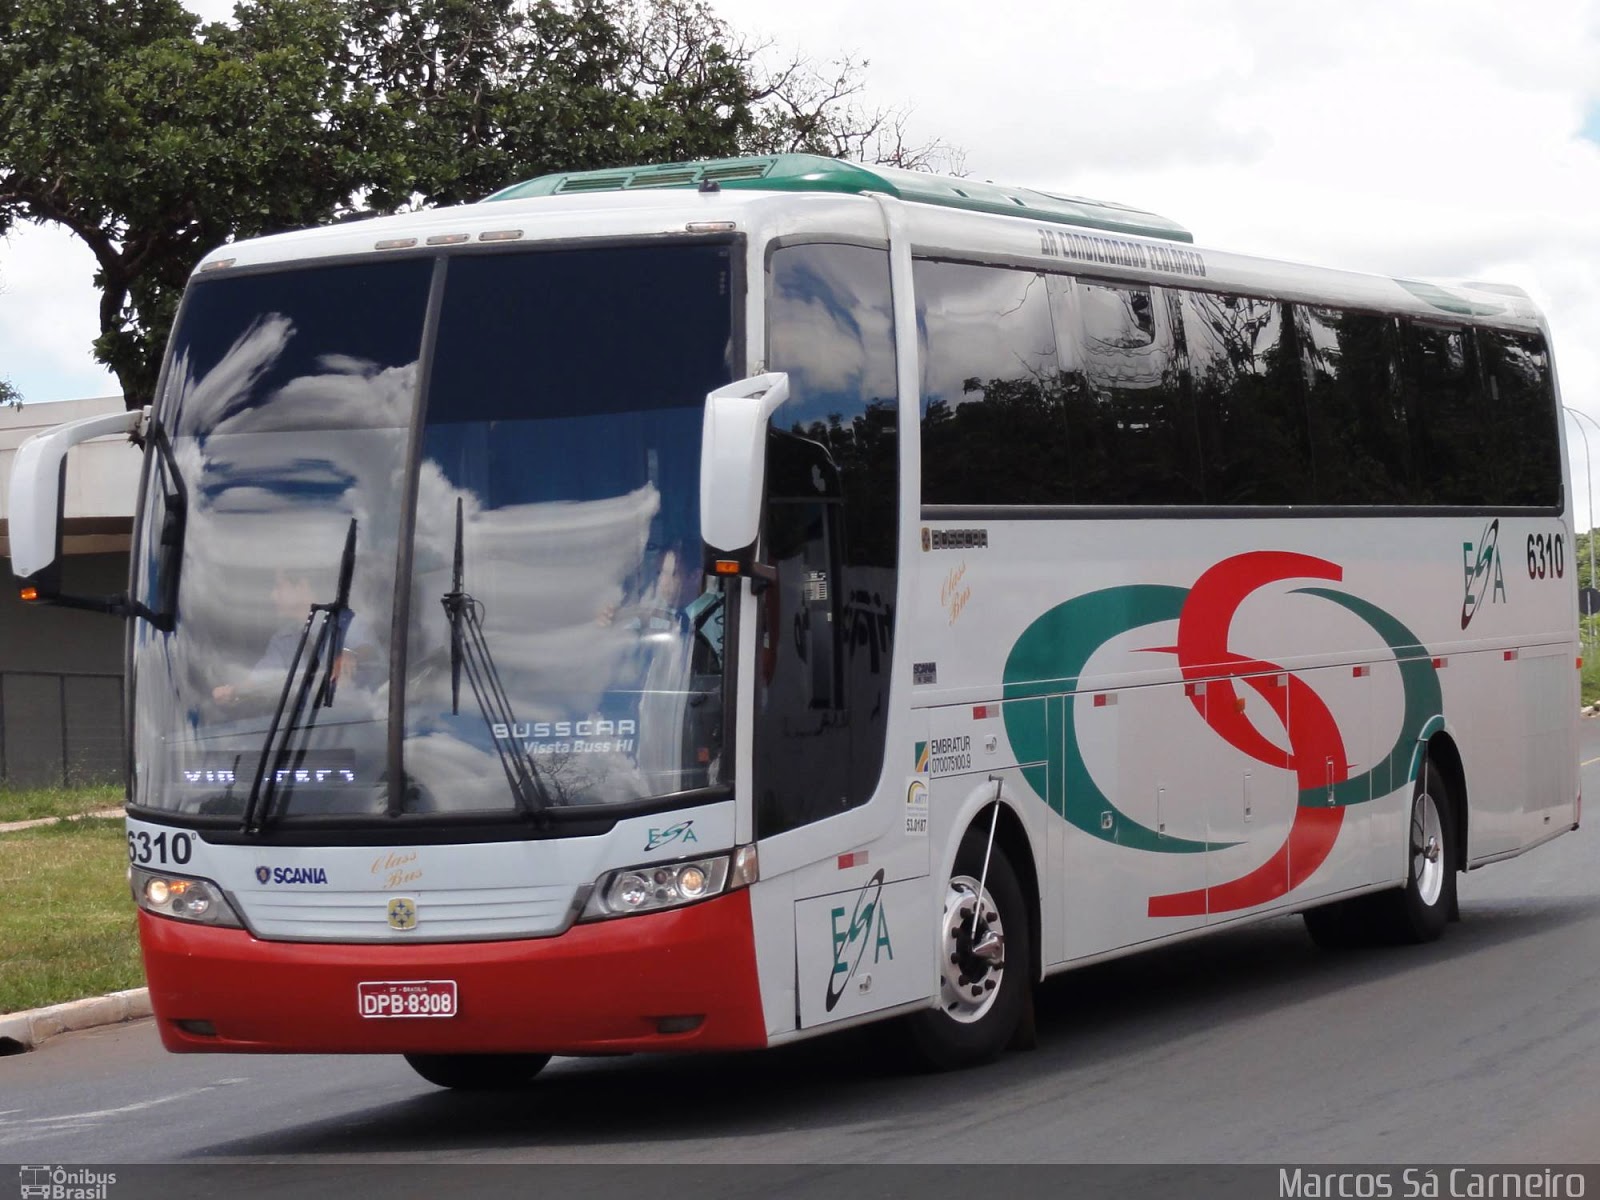 Gta Bus Brasil: Busscar Vissta Buss HI "ESA" de BrasÃ­lia - DF